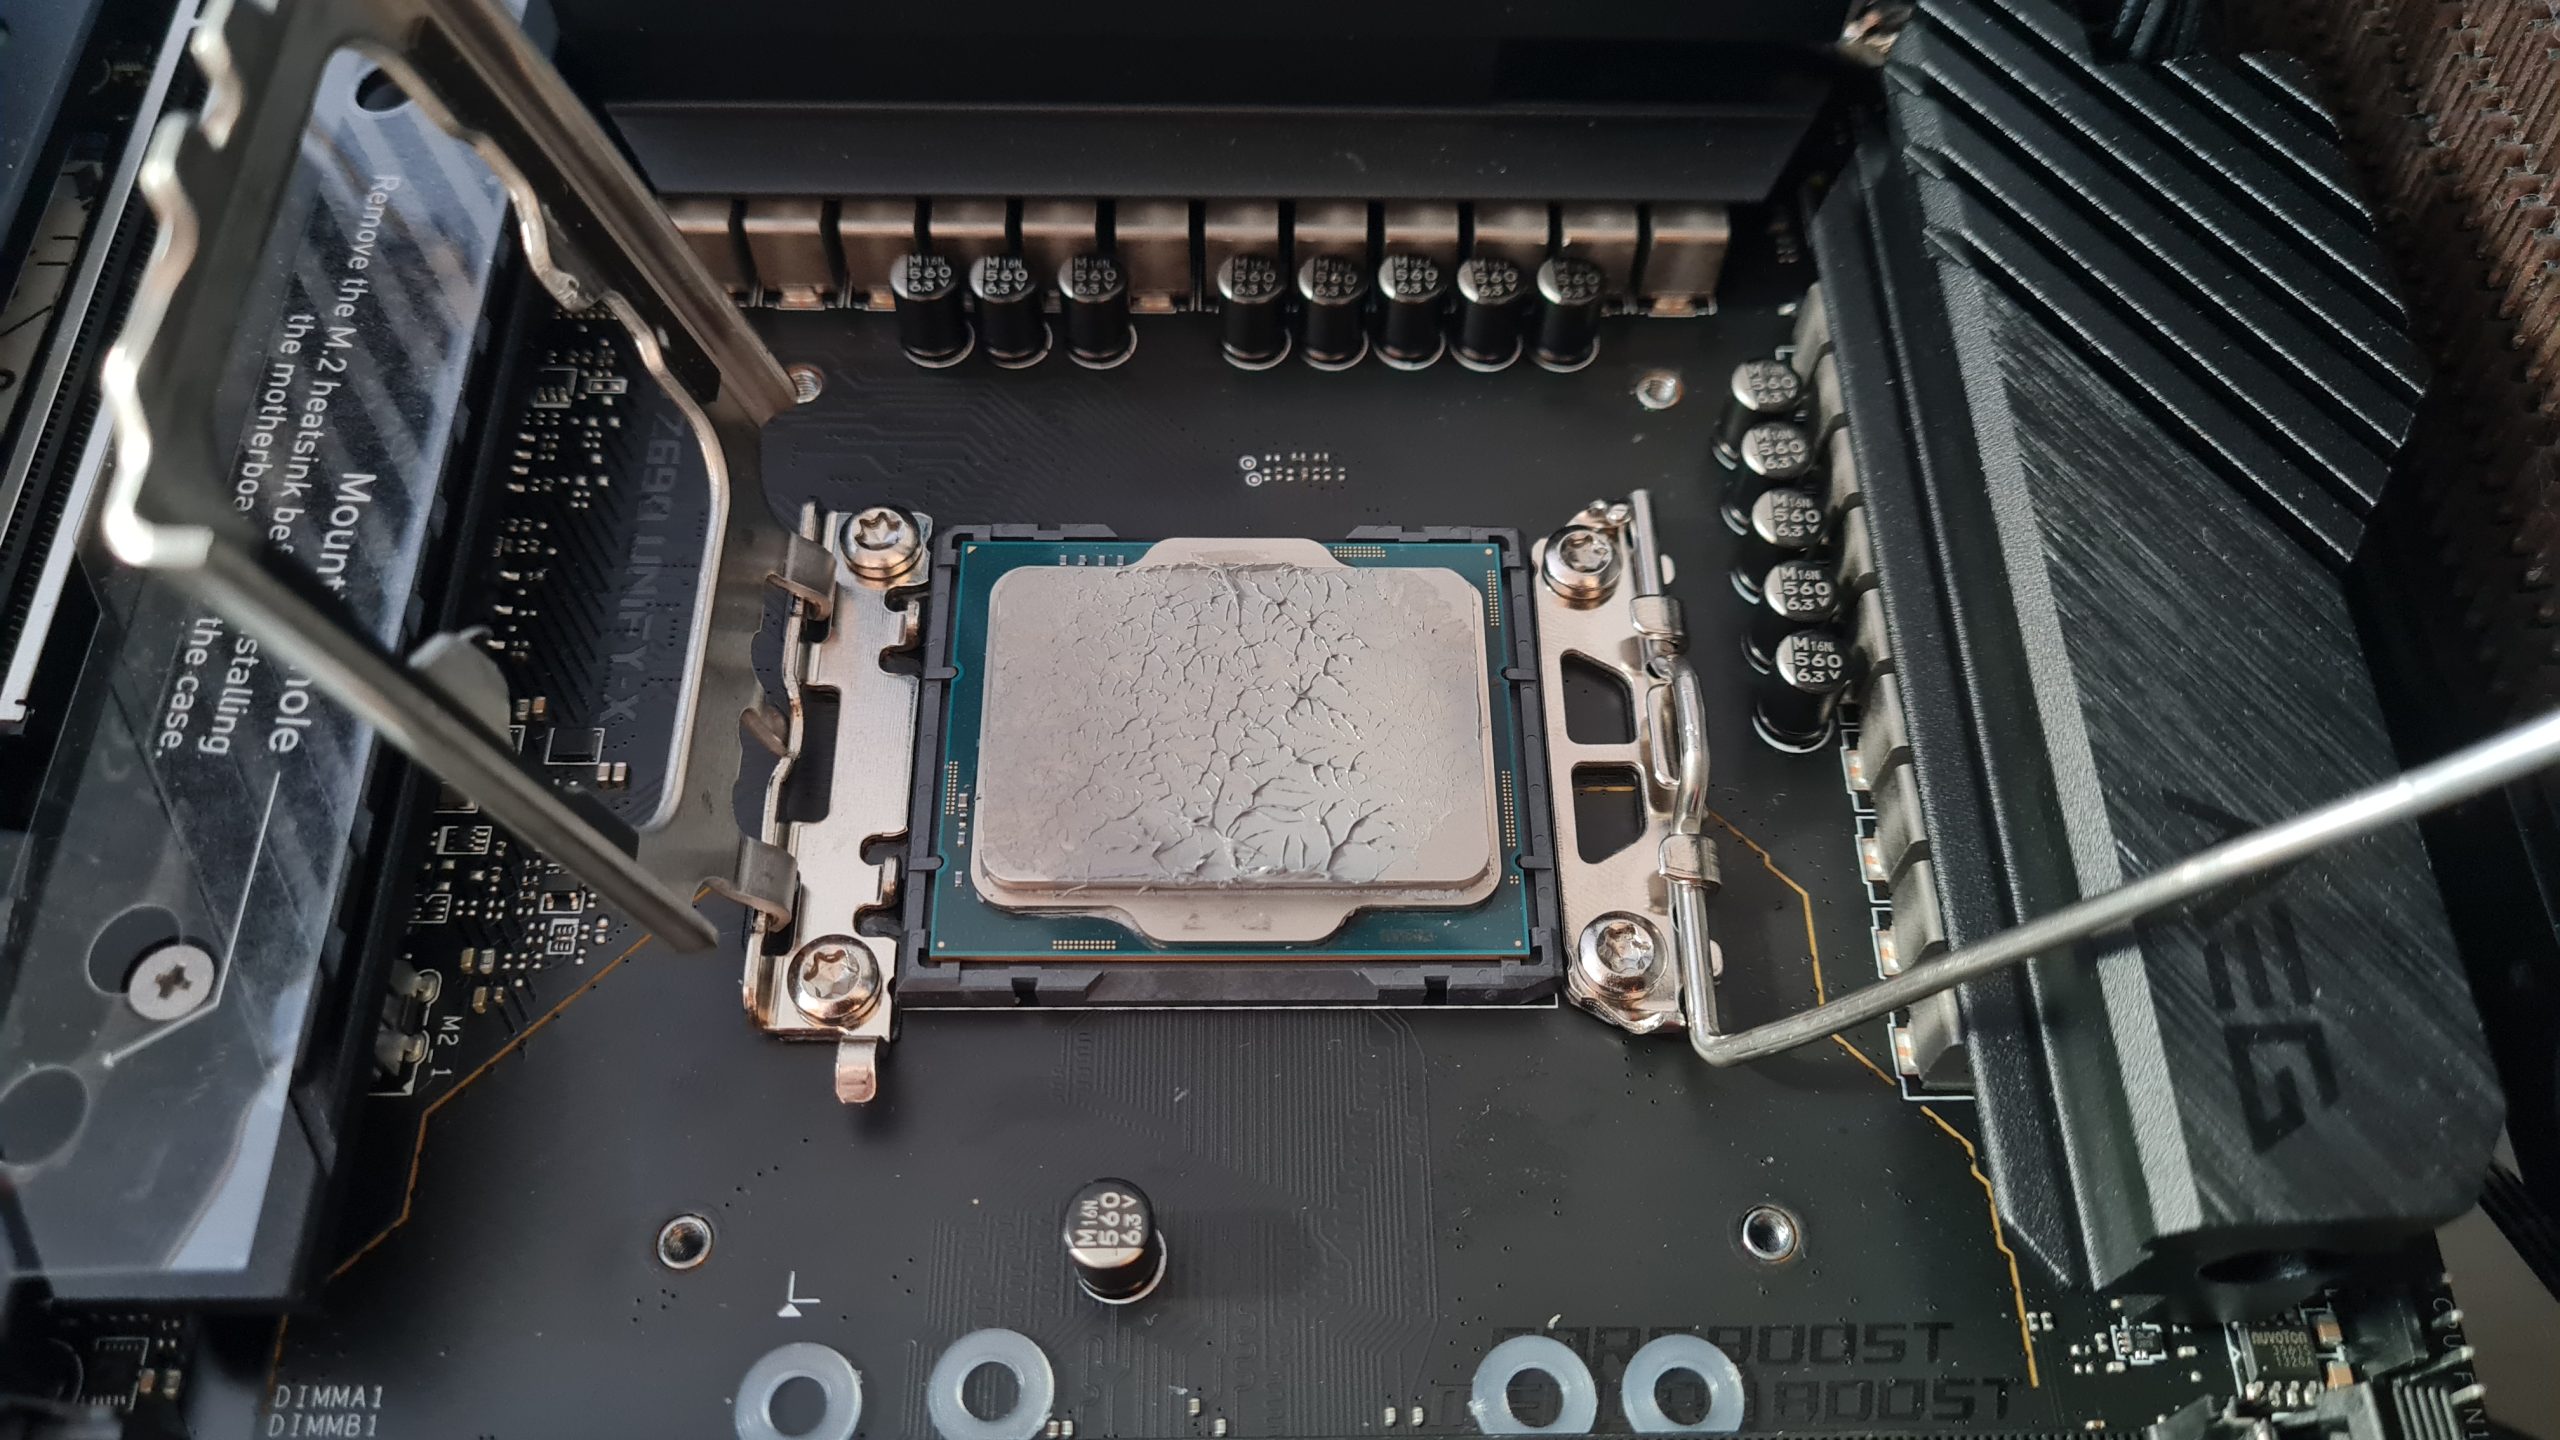 [IgorsLab] Intel Core i9-11900K - power consumption and hidden